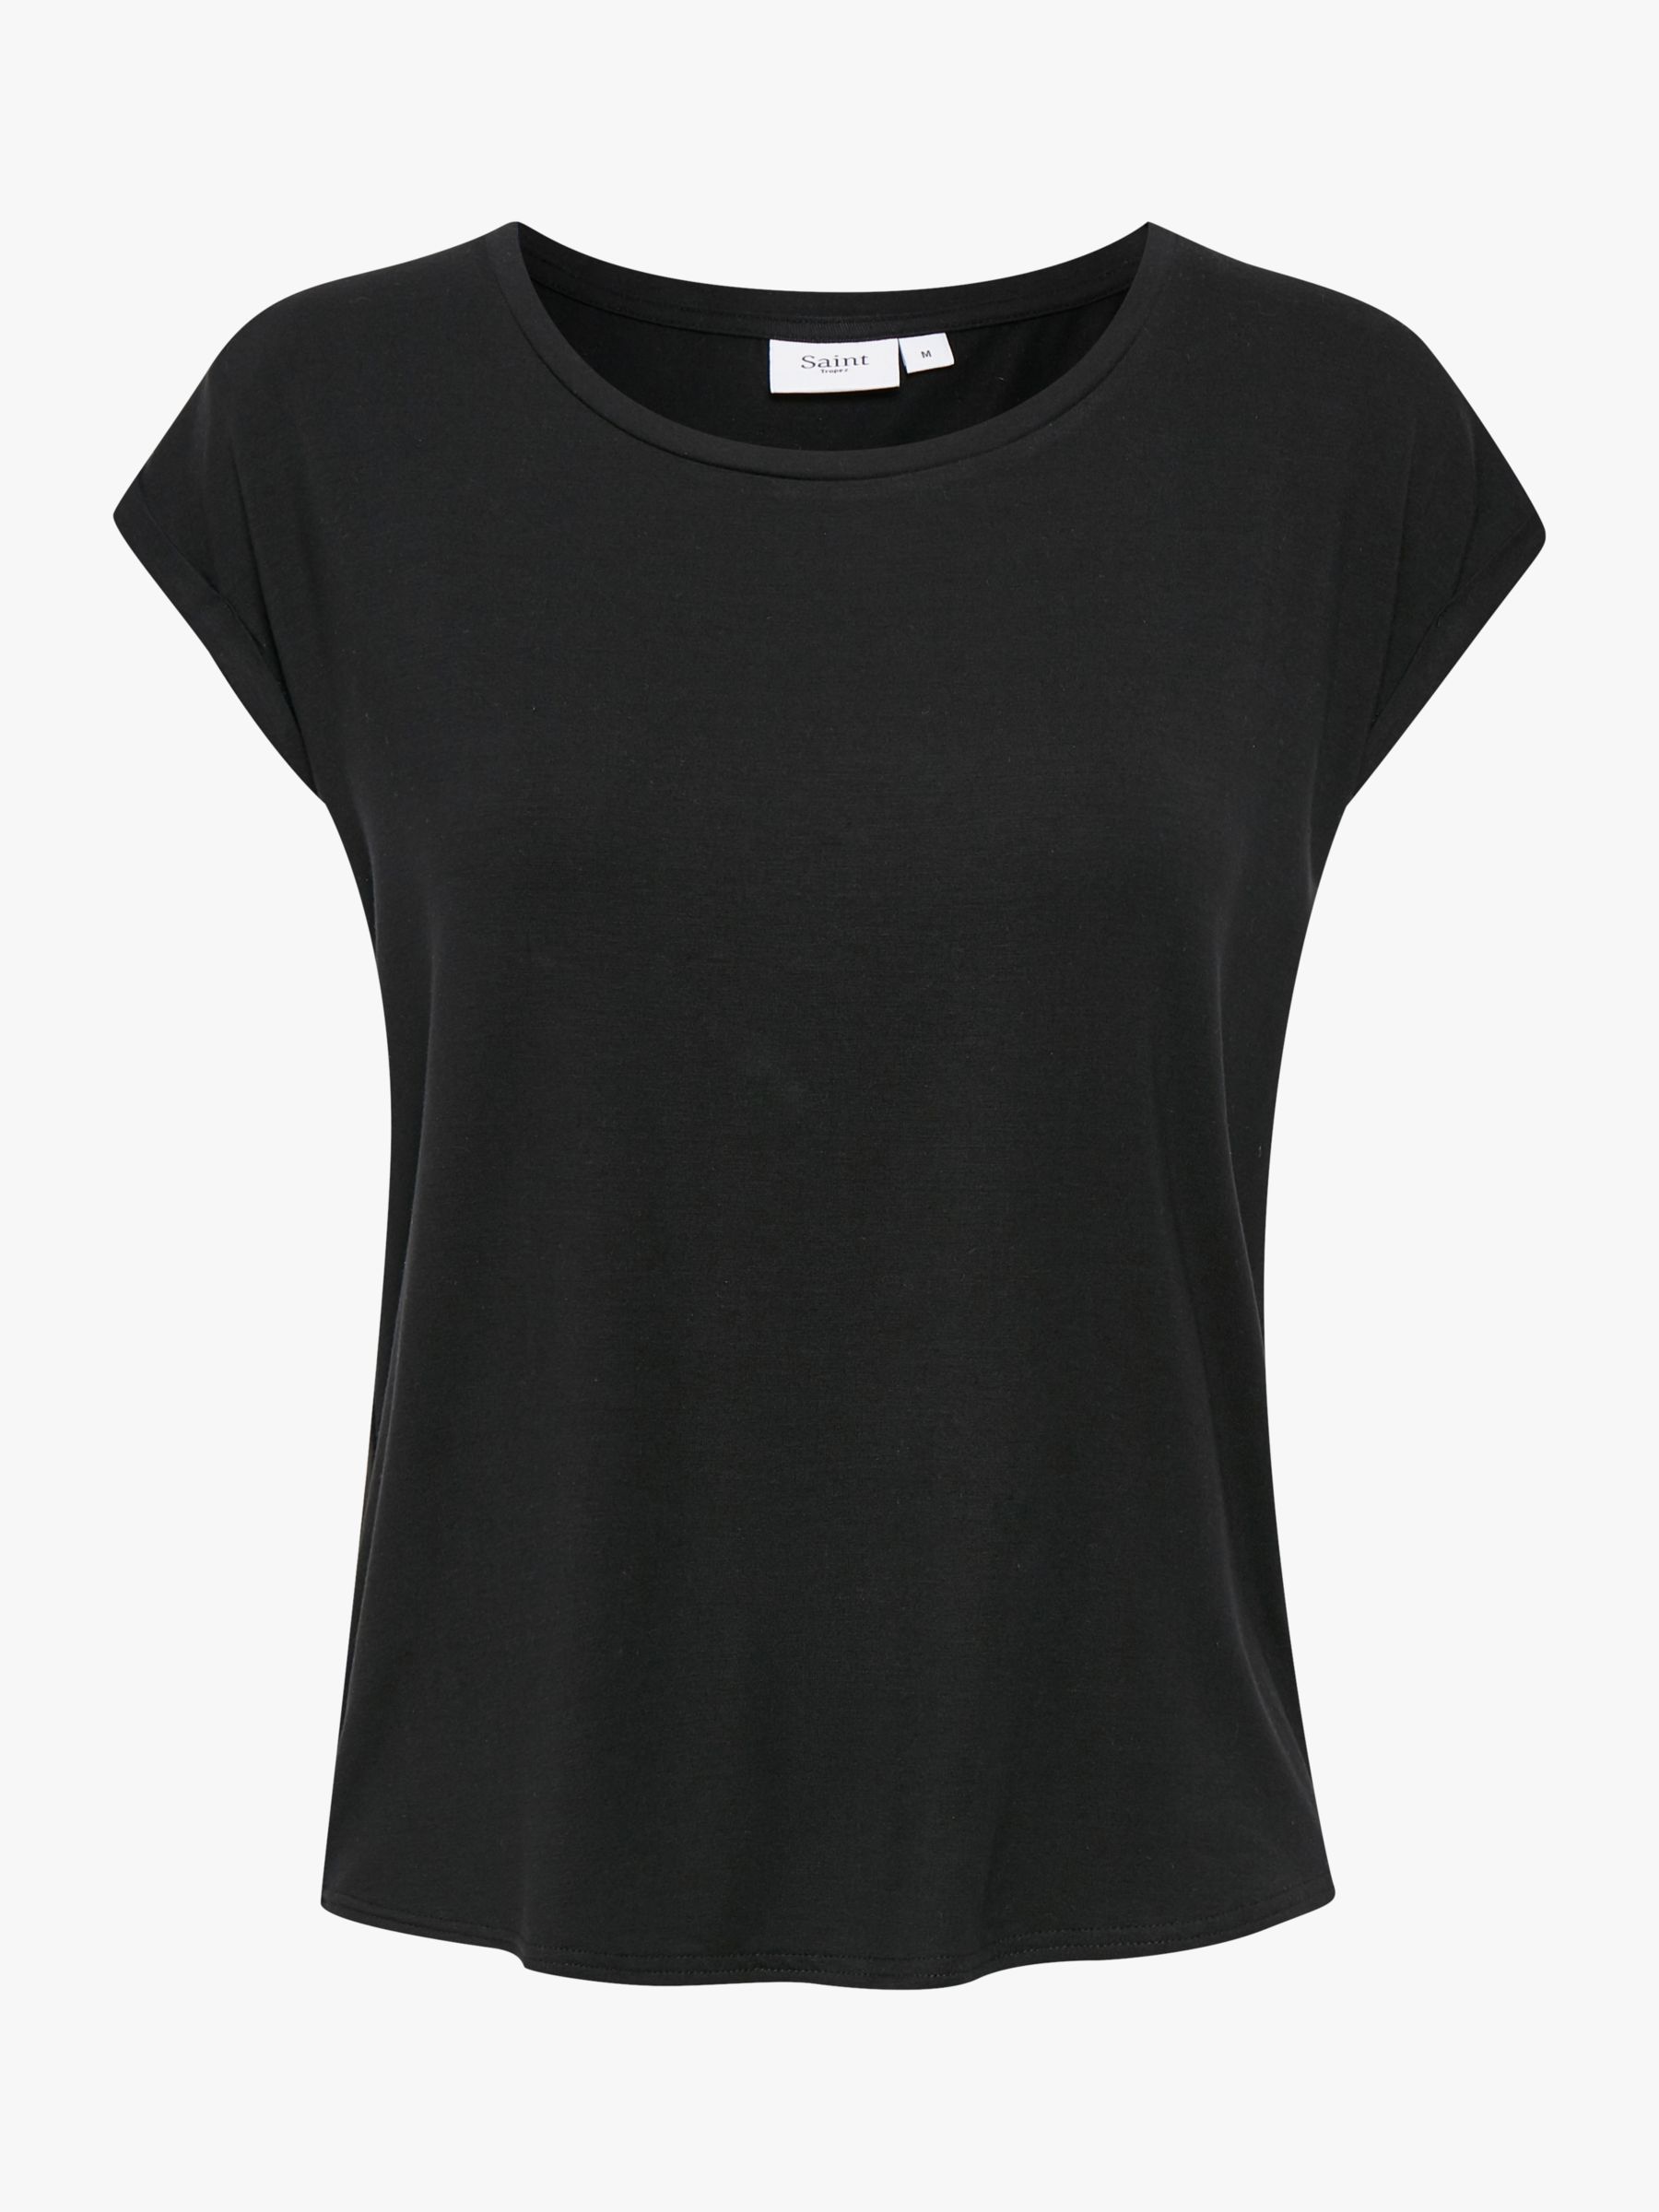 Saint Tropez Adelia T-Shirt, Black at John Lewis & Partners